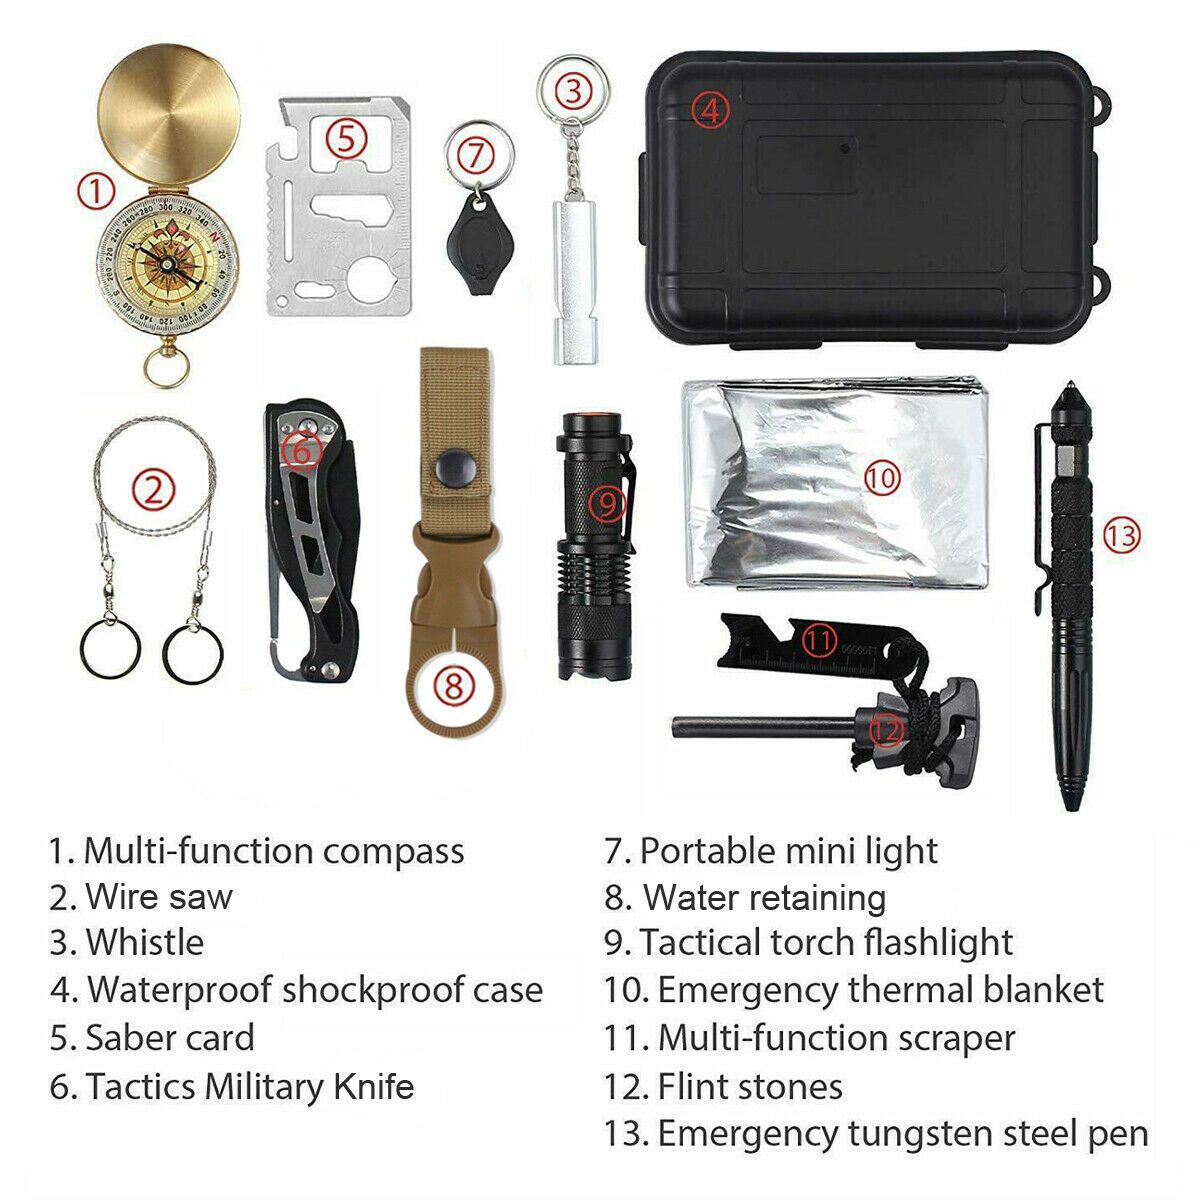 Emergency/Survival Safety Gear Kit